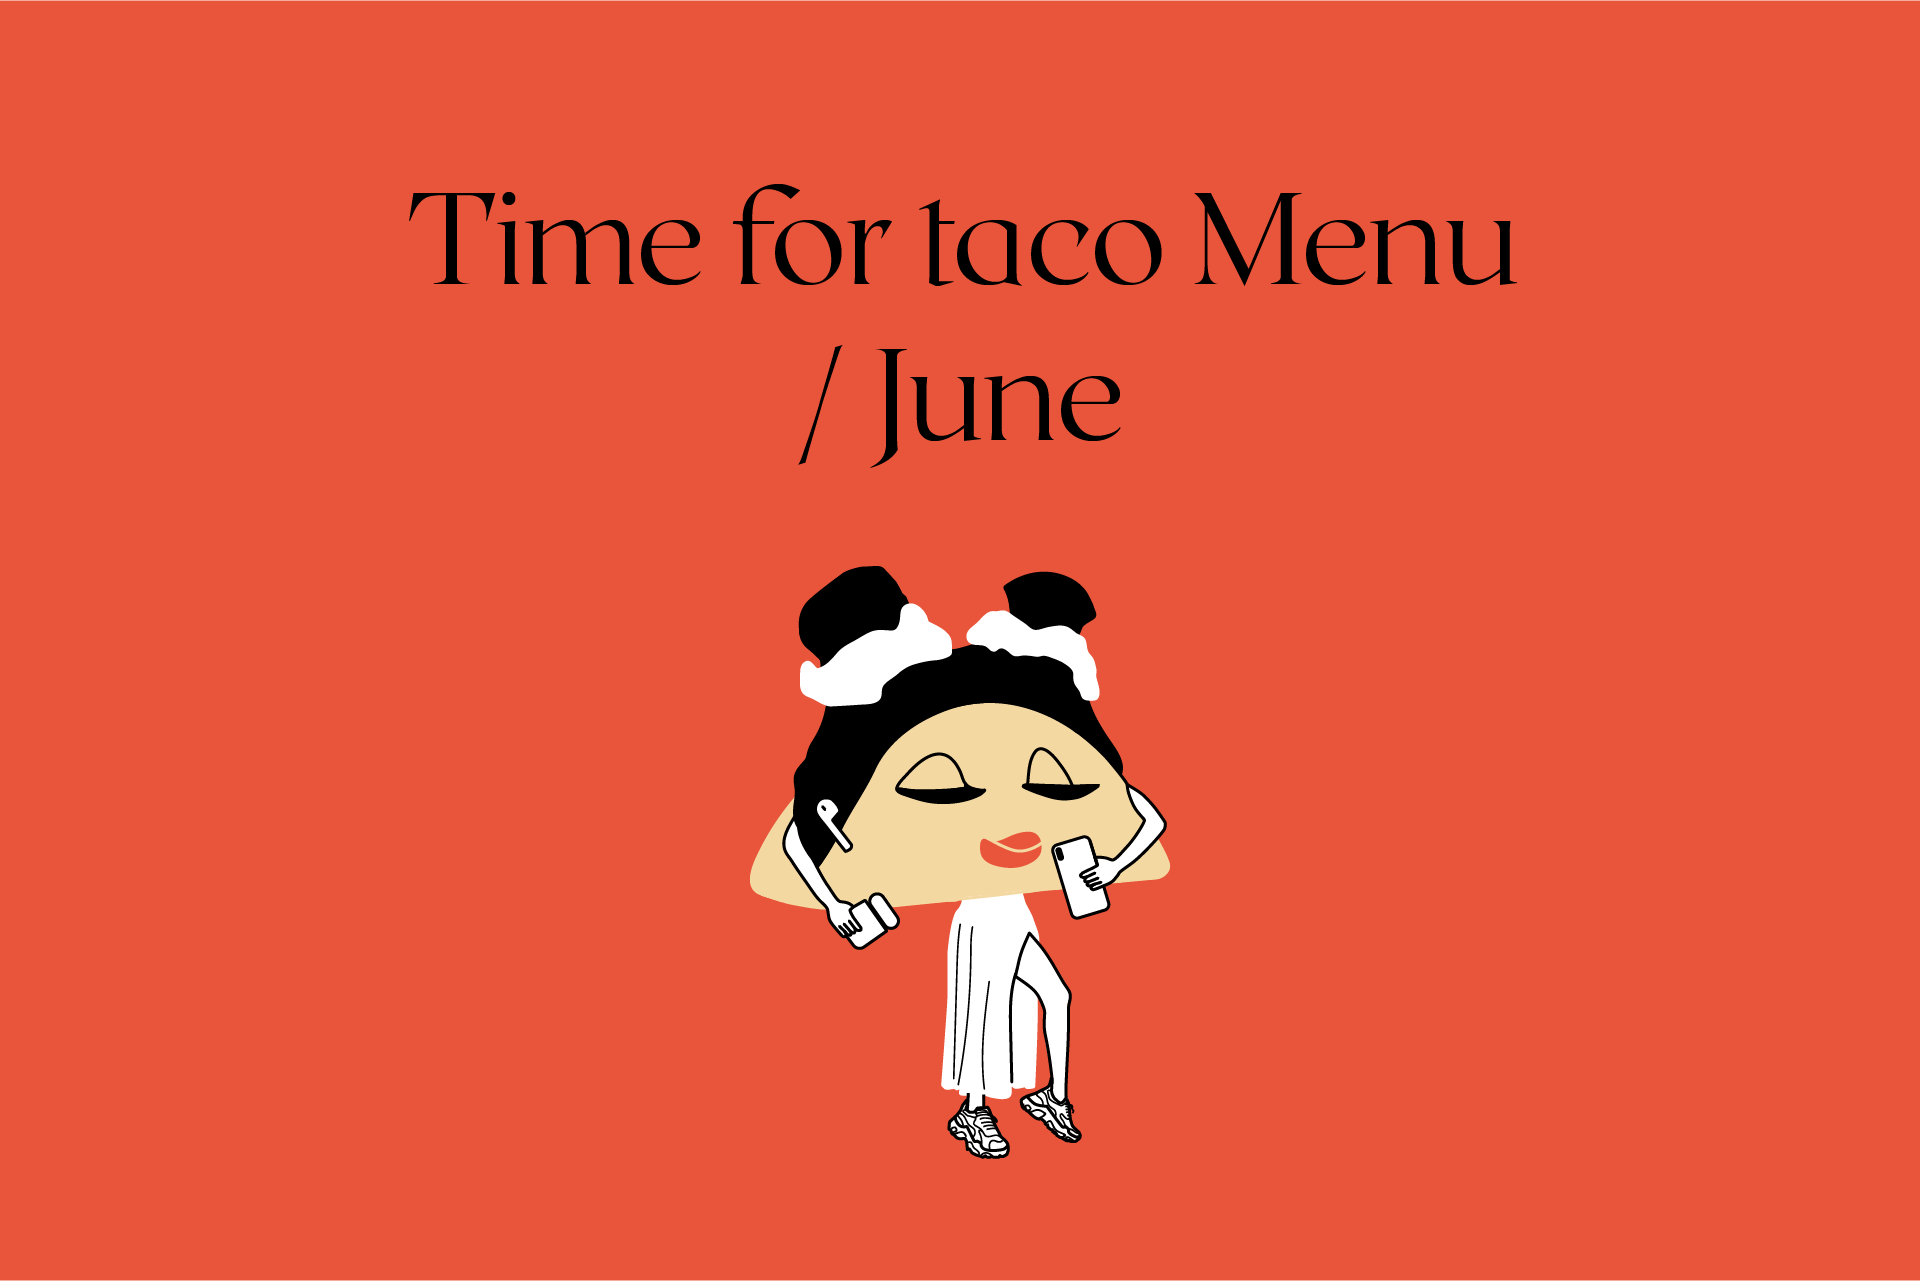 Time for taco Menu / June